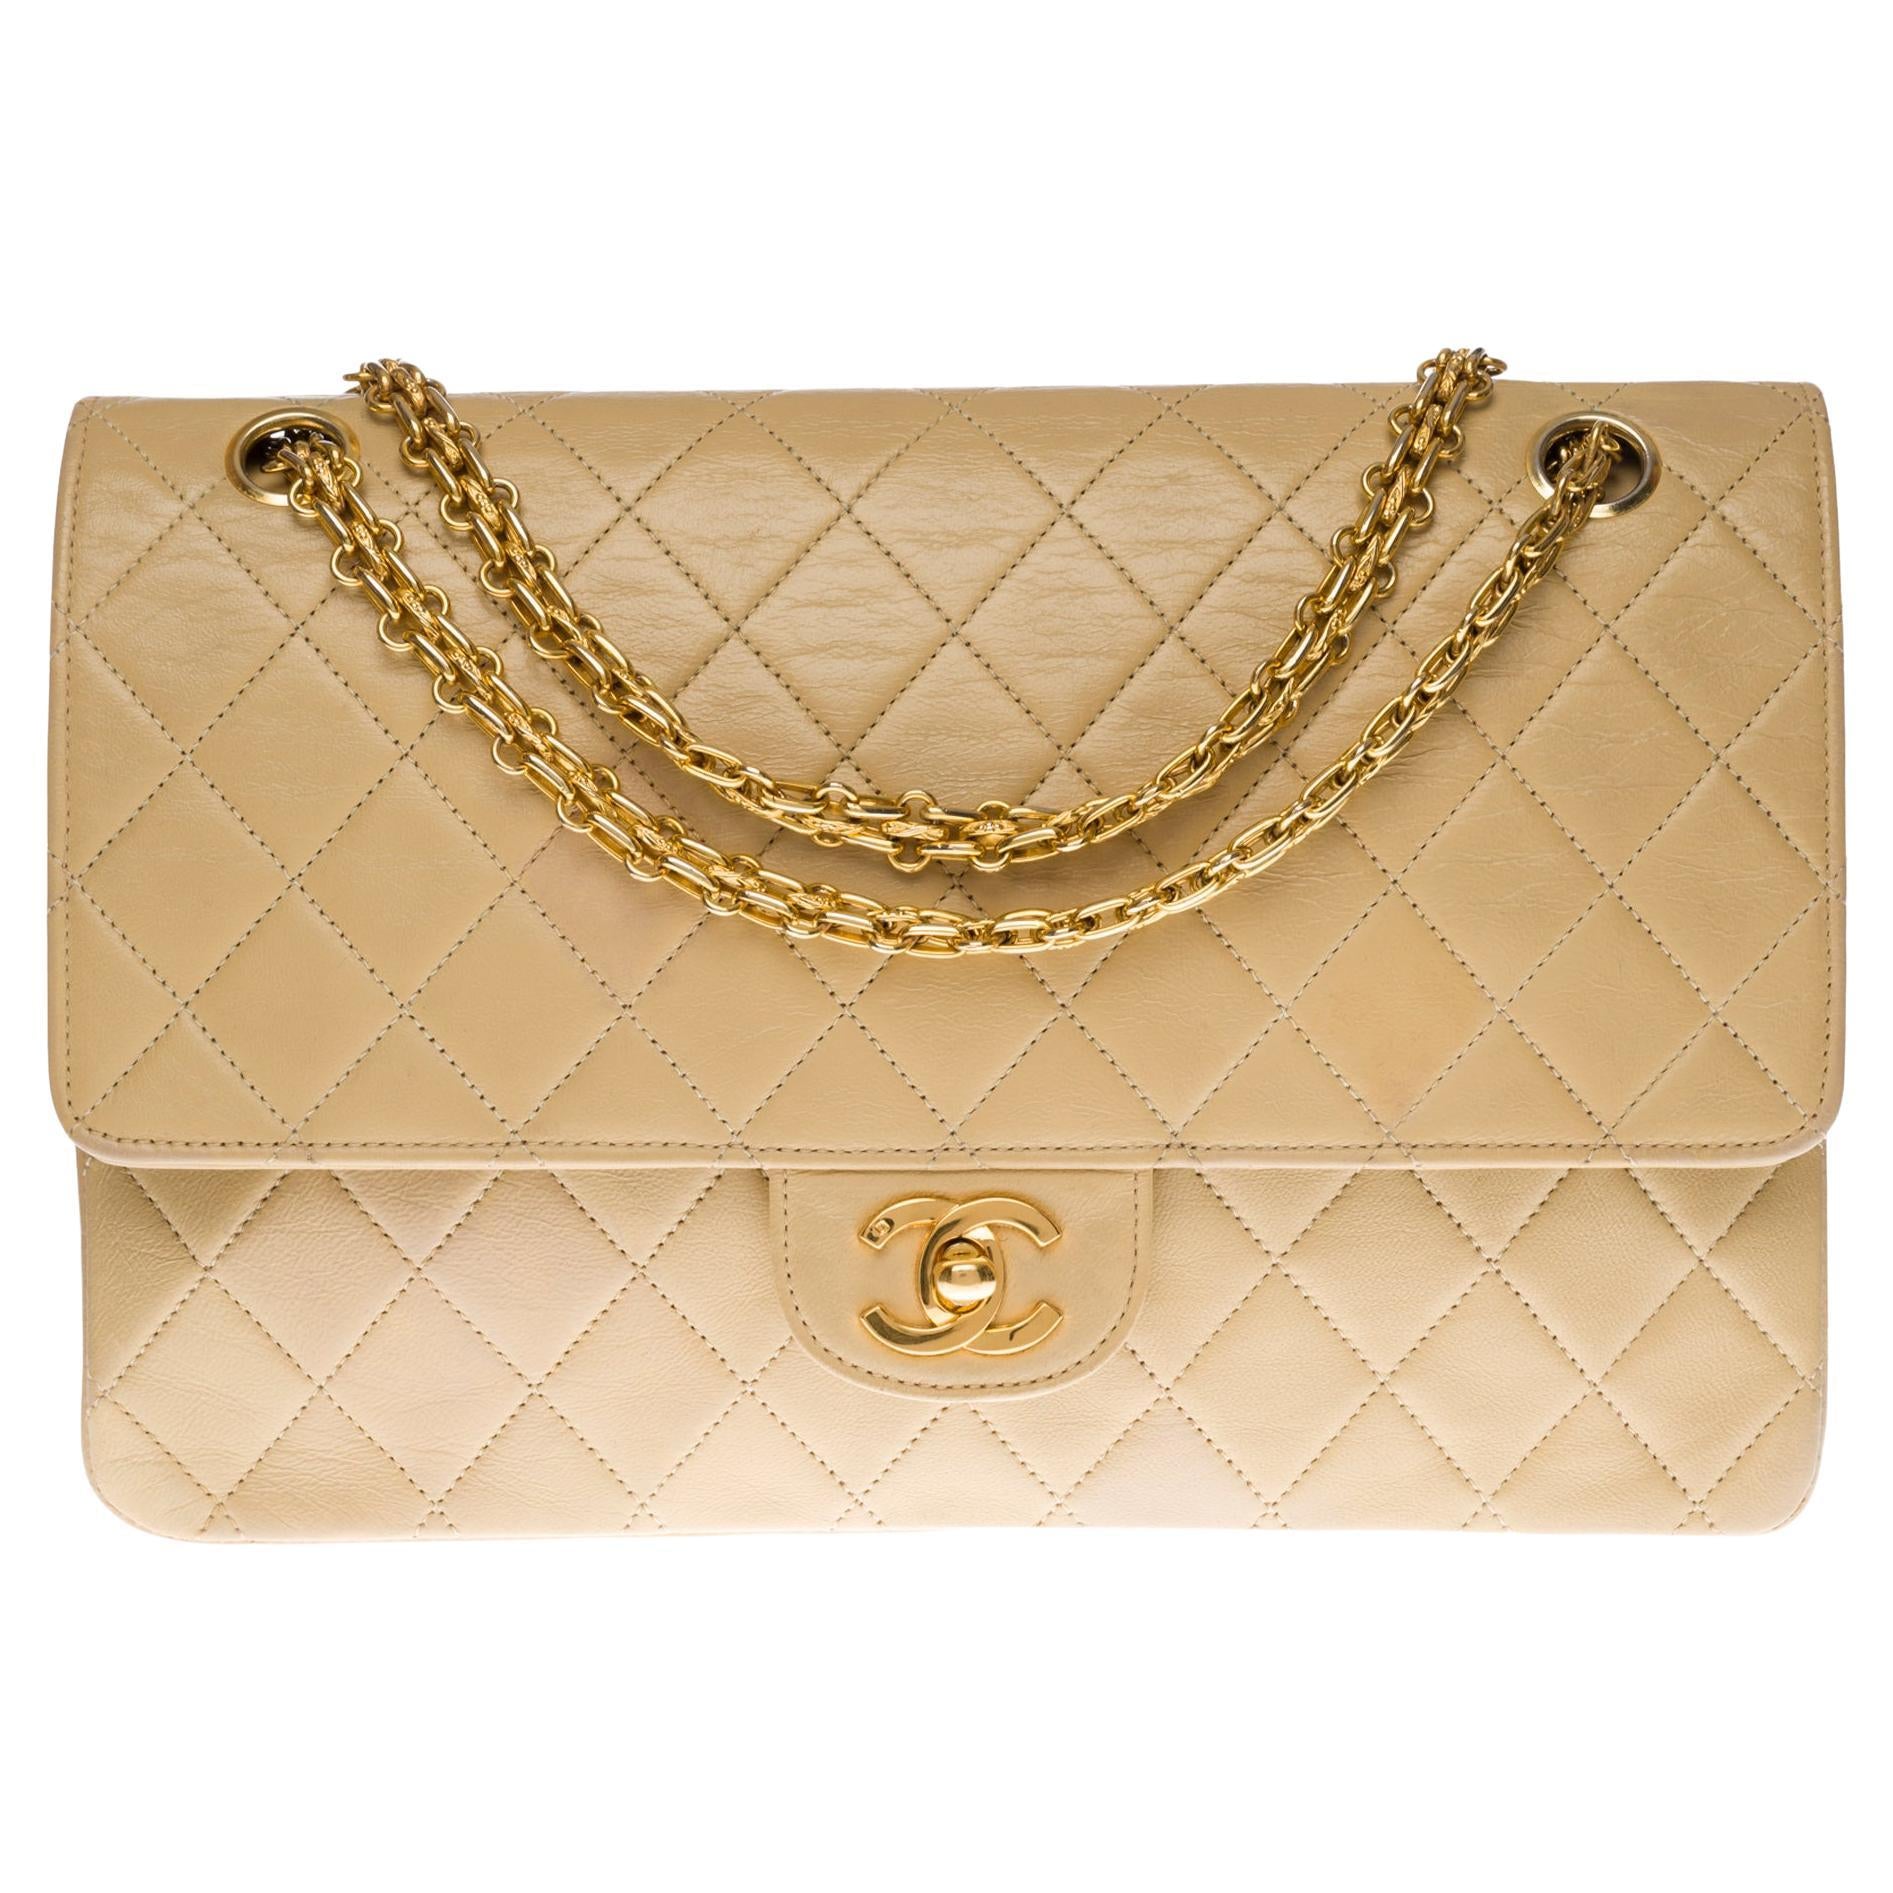 Chanel Timeless/Classique Handbag With Double Flap in Beige Lambskin, GHW